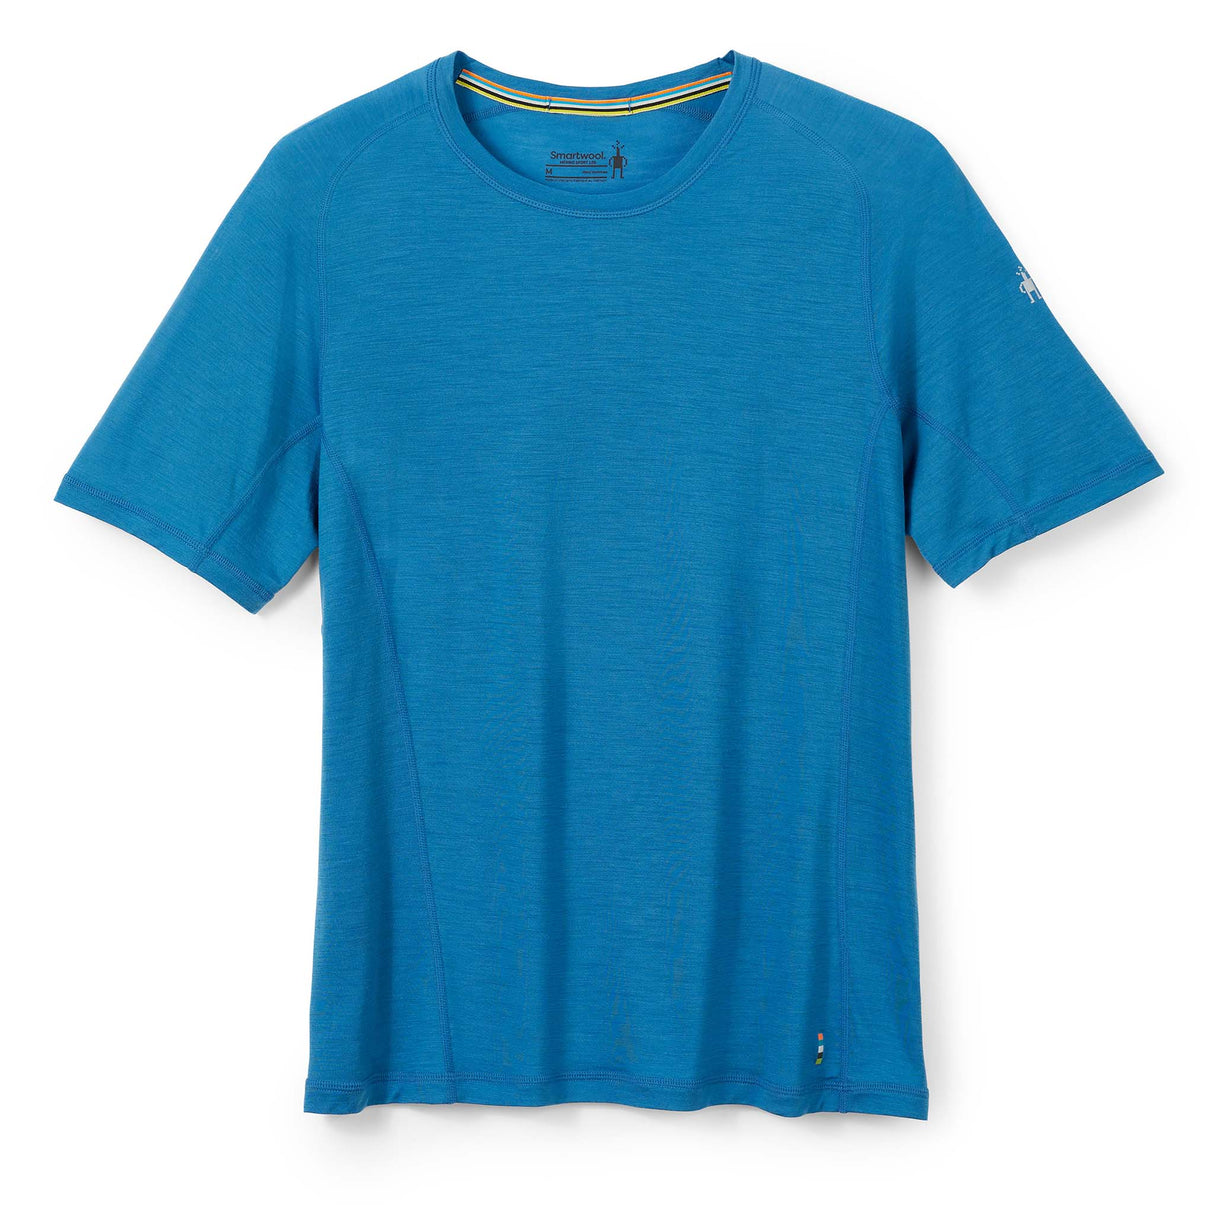 Smartwool Merino Sport 120 t-shirt à manches courtes homme light neptune blue